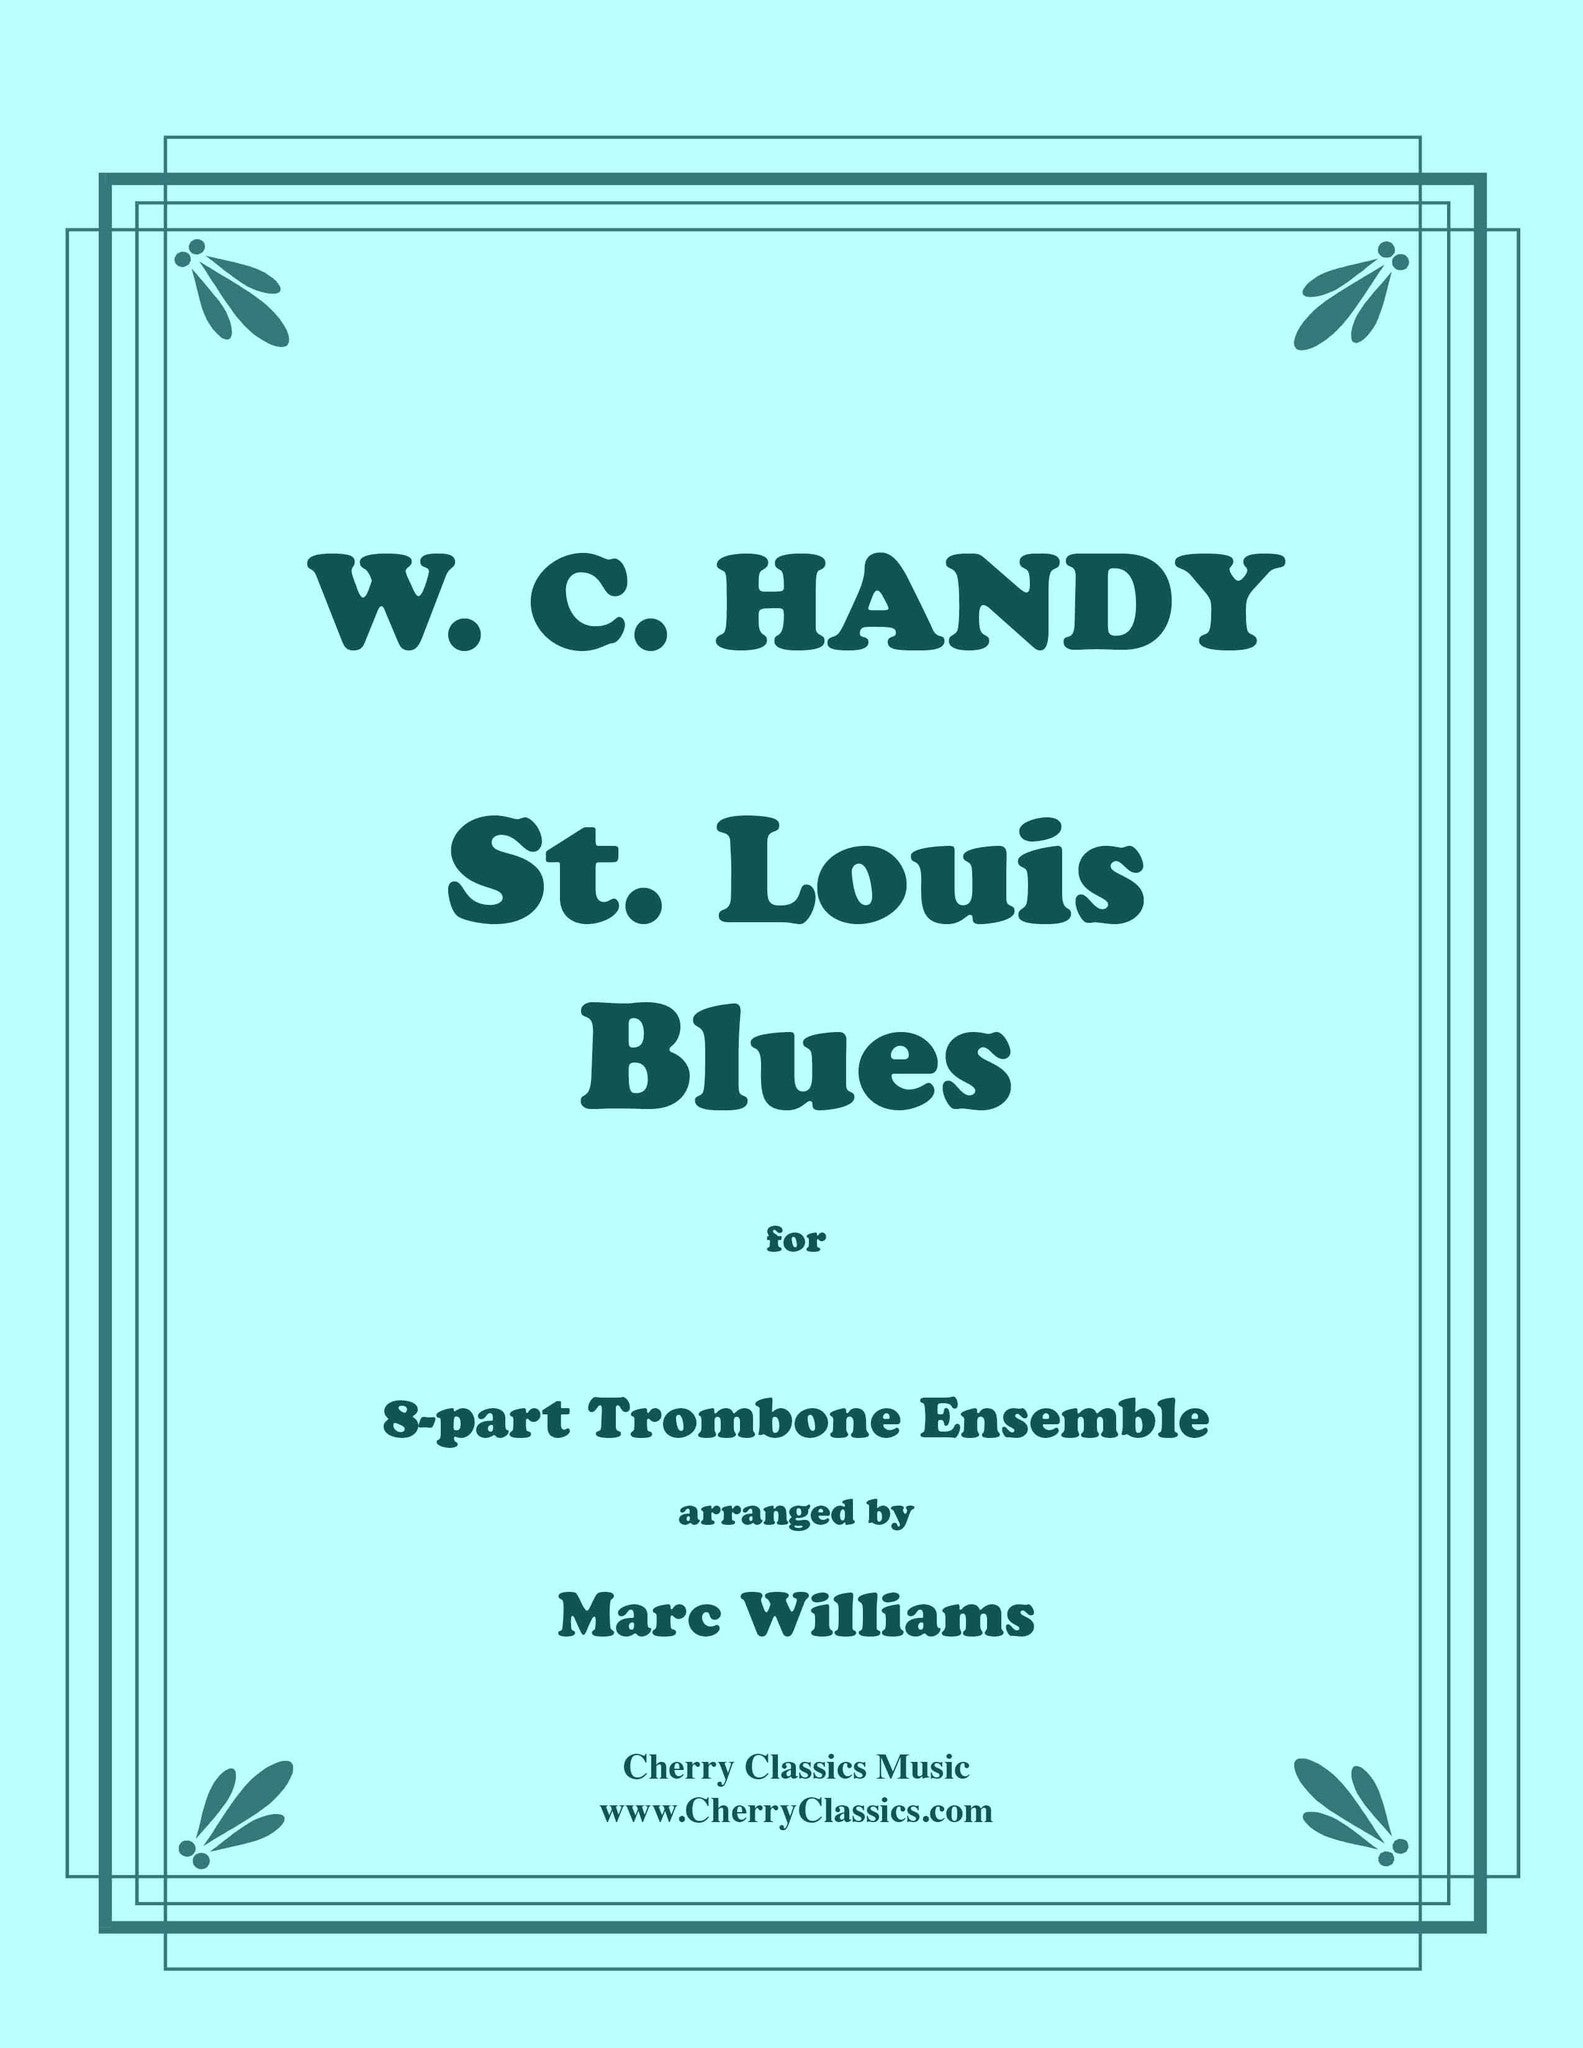 St. Louis Blues (Handy)